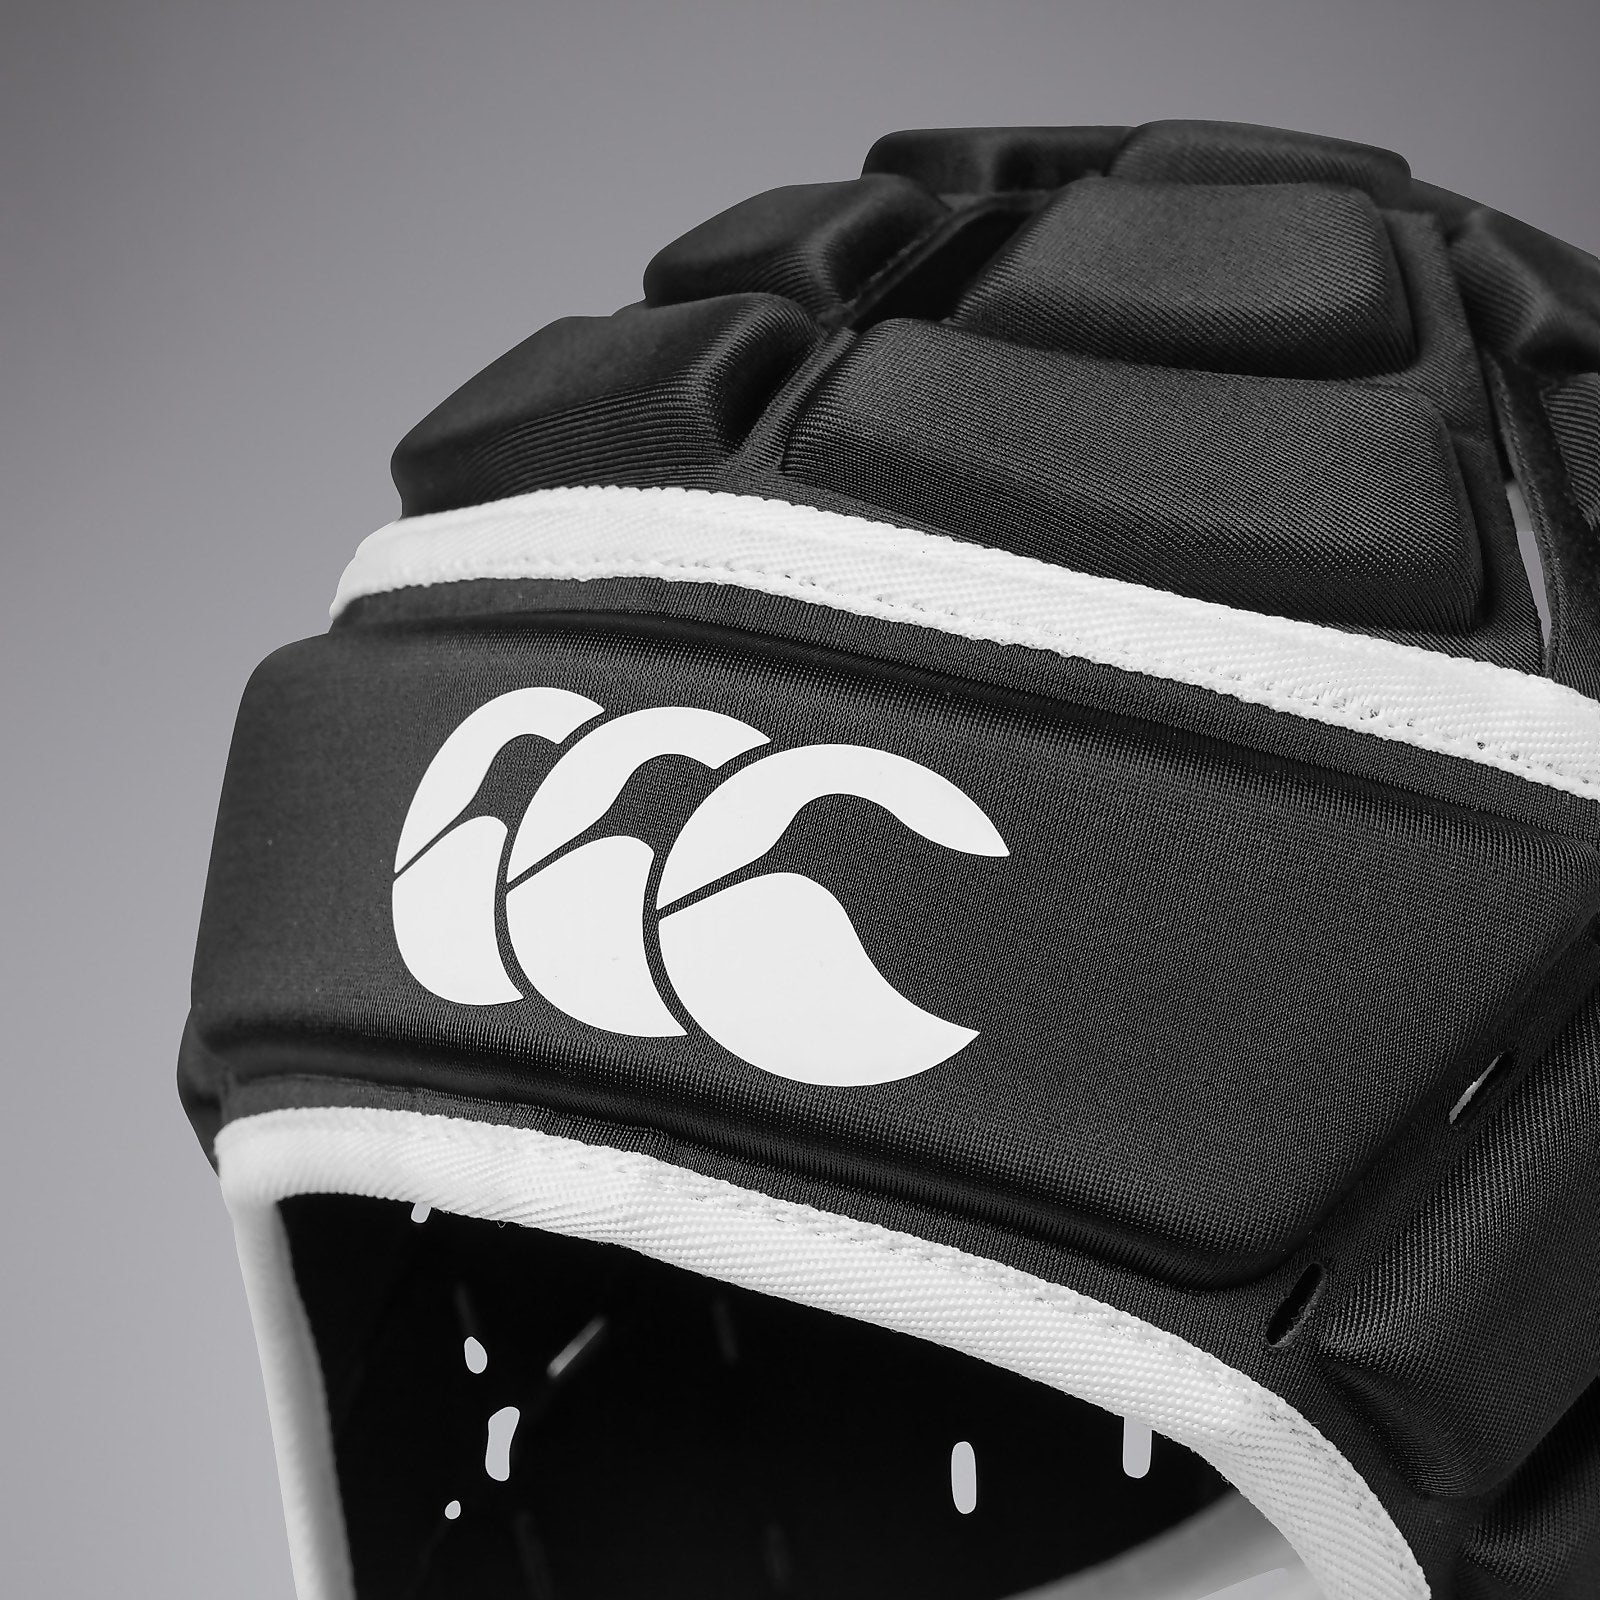 CCC Core Headguard - black